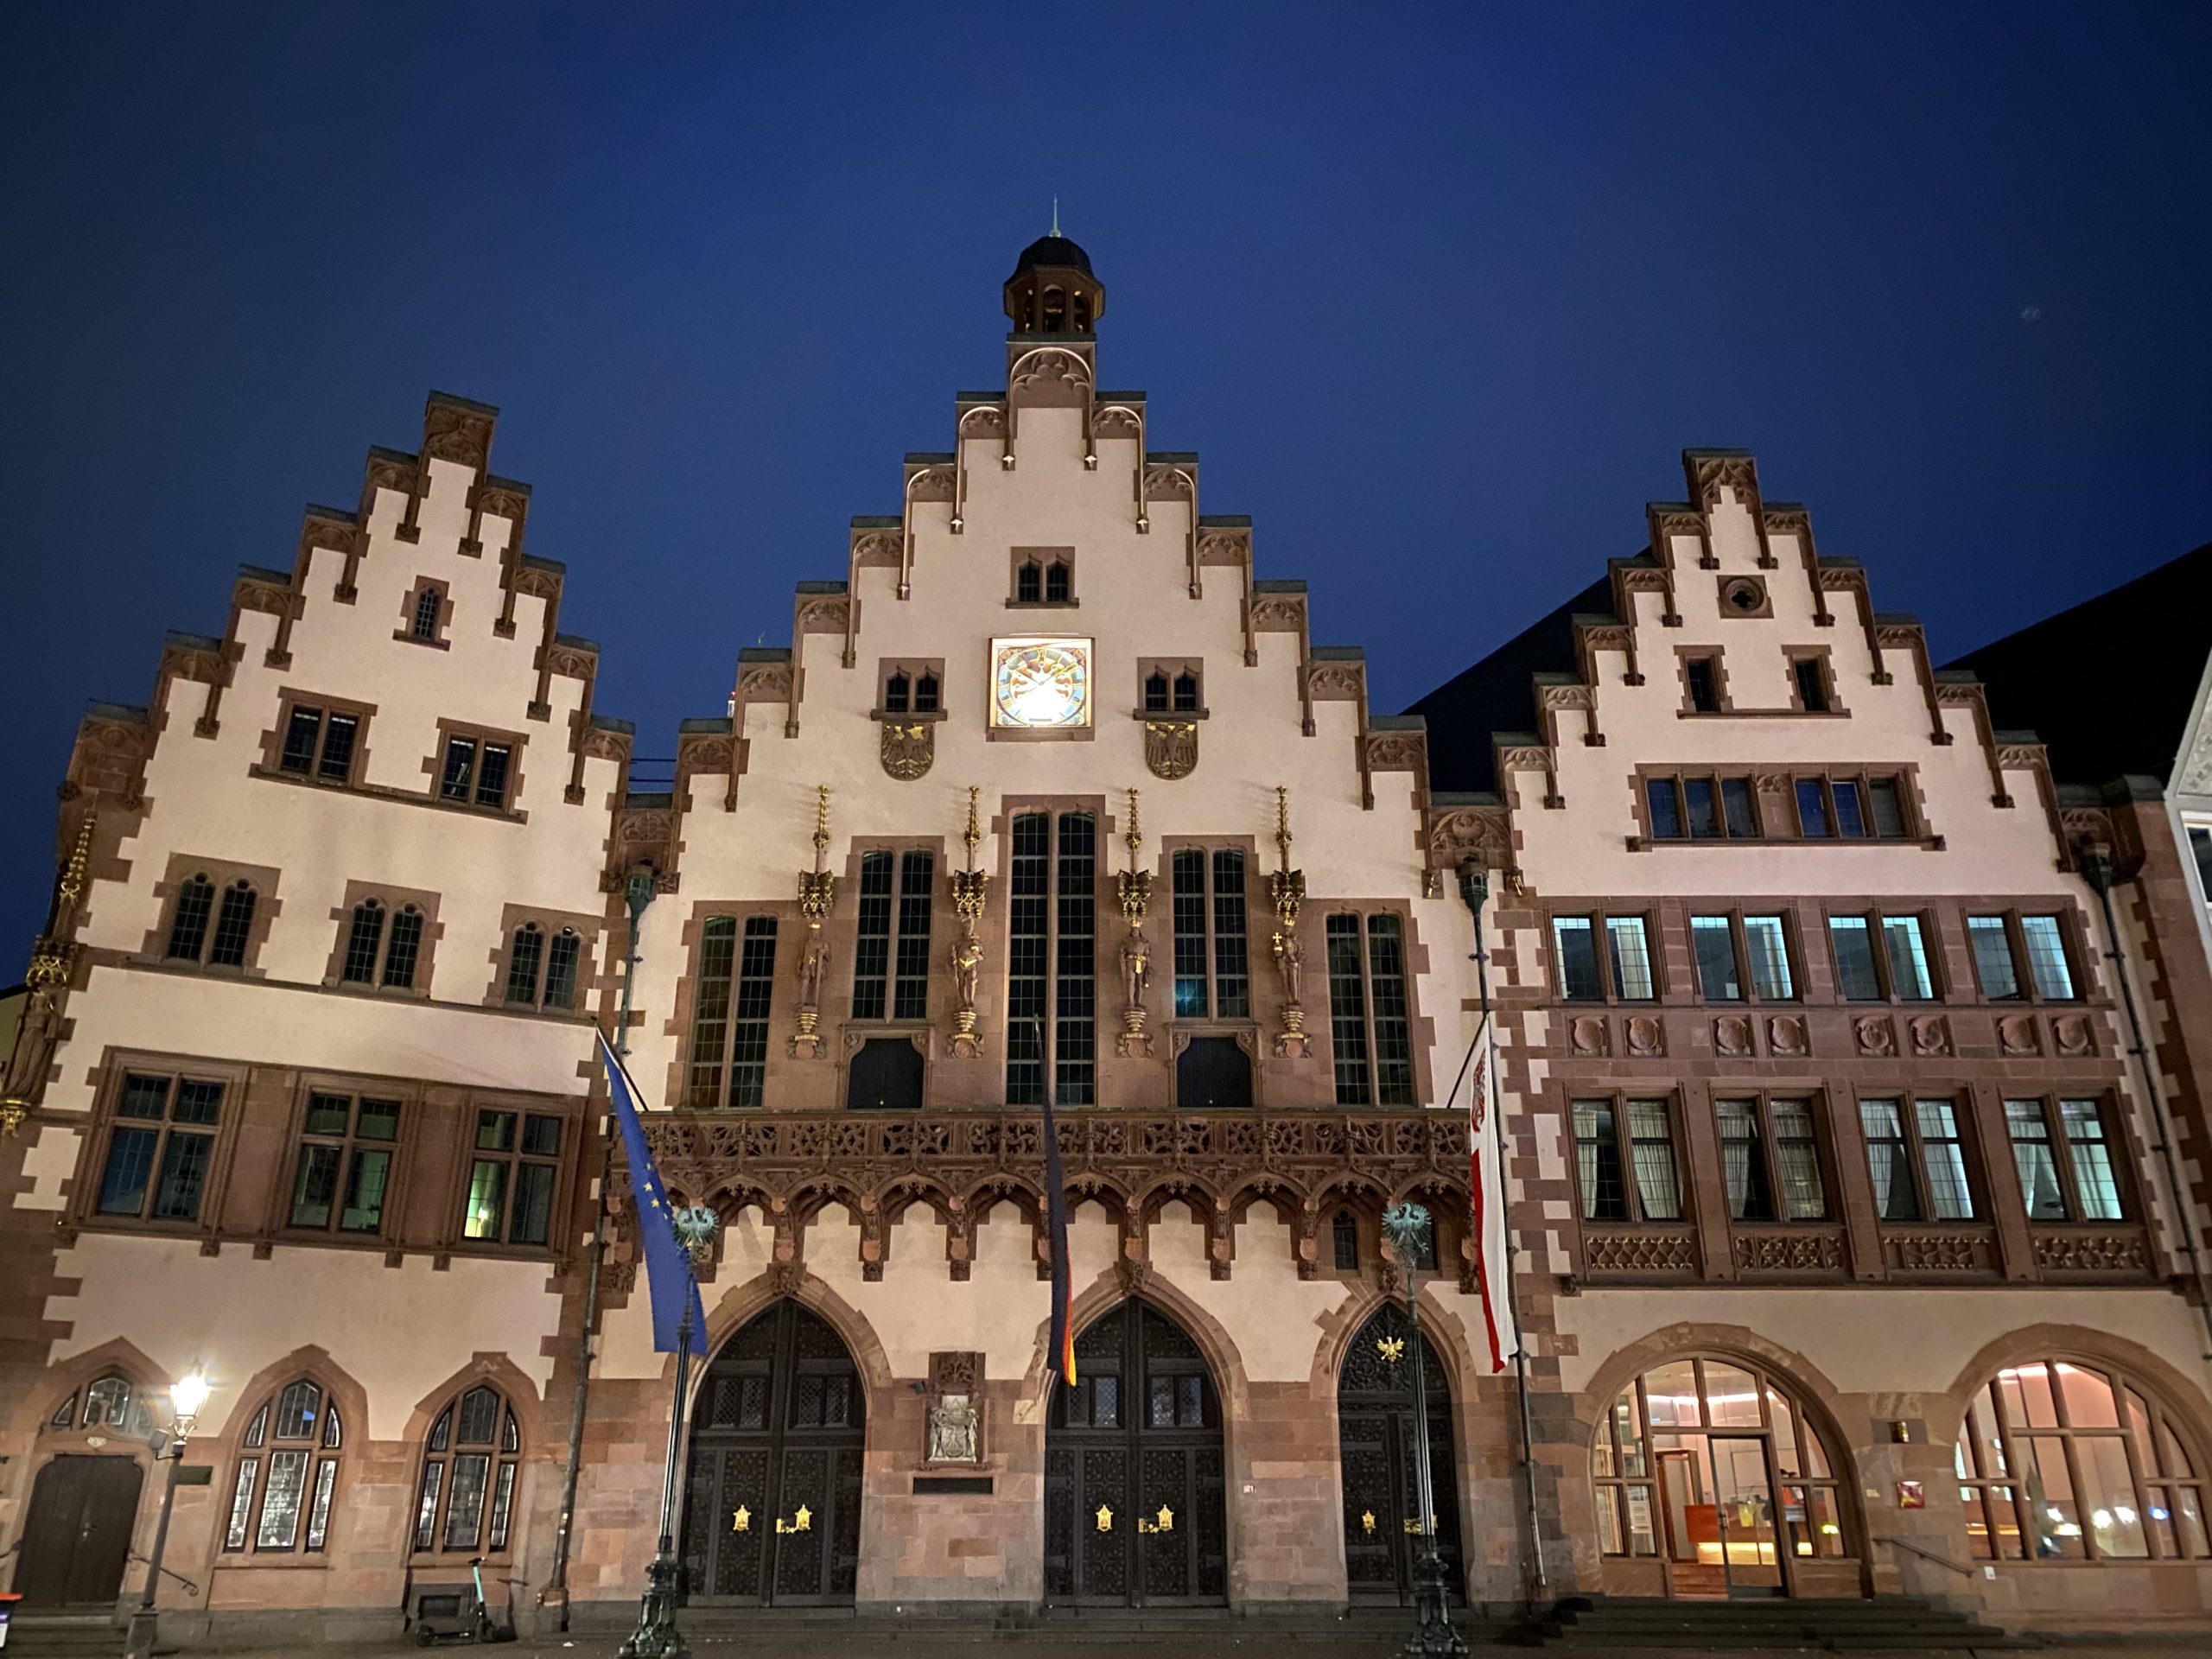 Buildings in Römerberg, Frankfurt taken by night time.